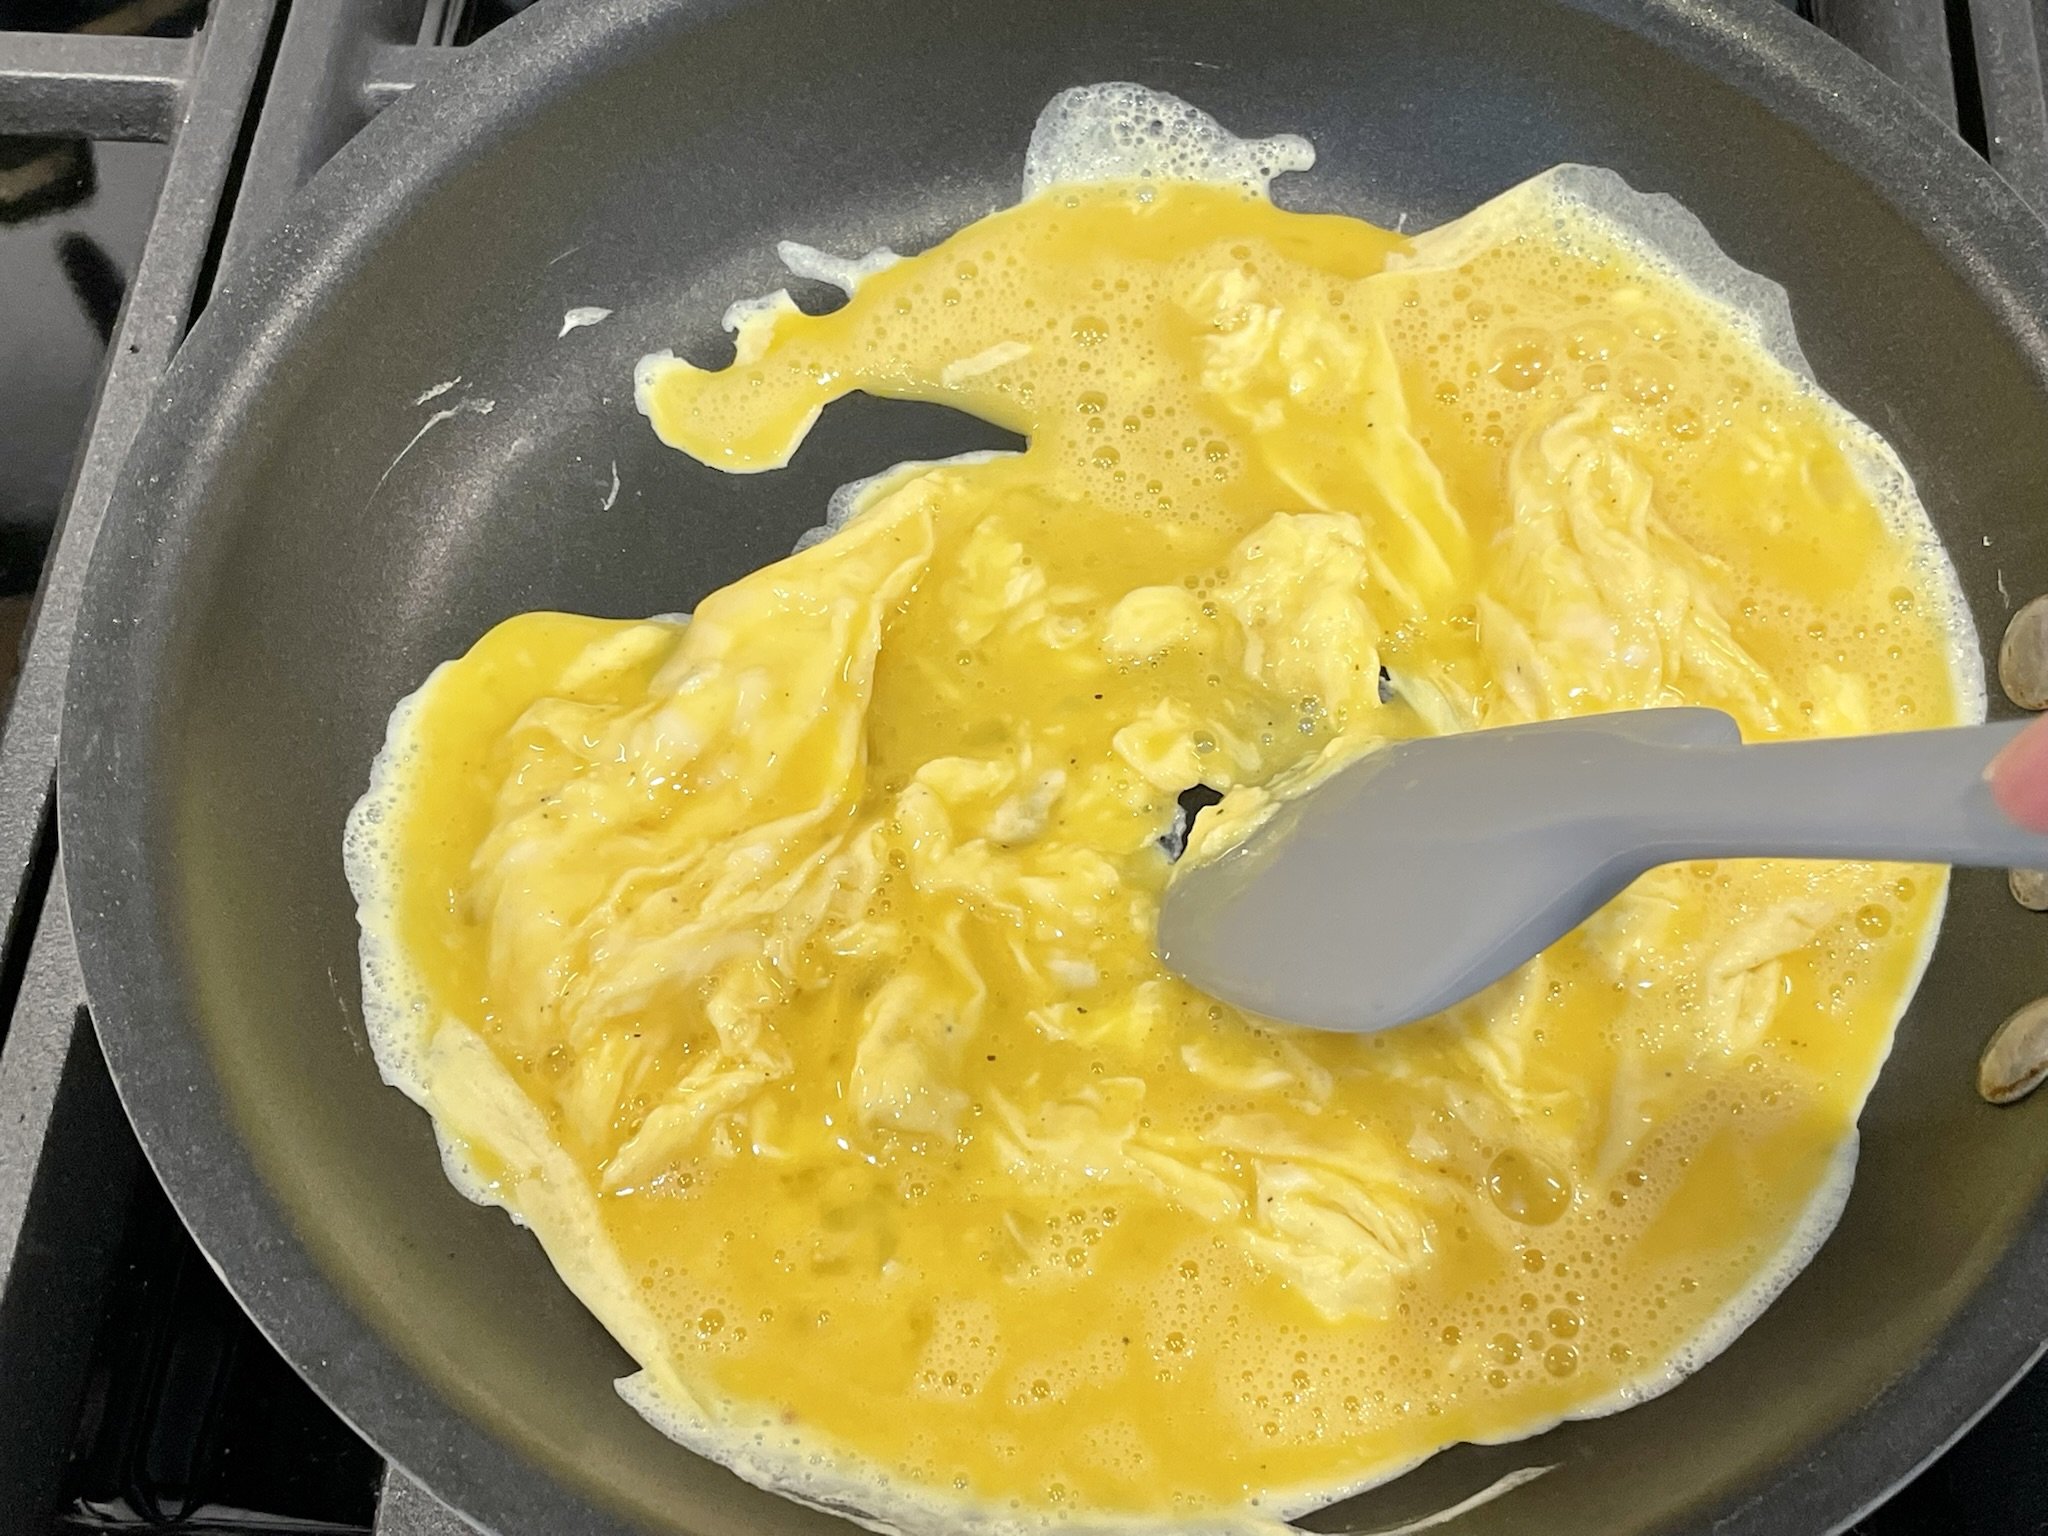 Scramble eggs.